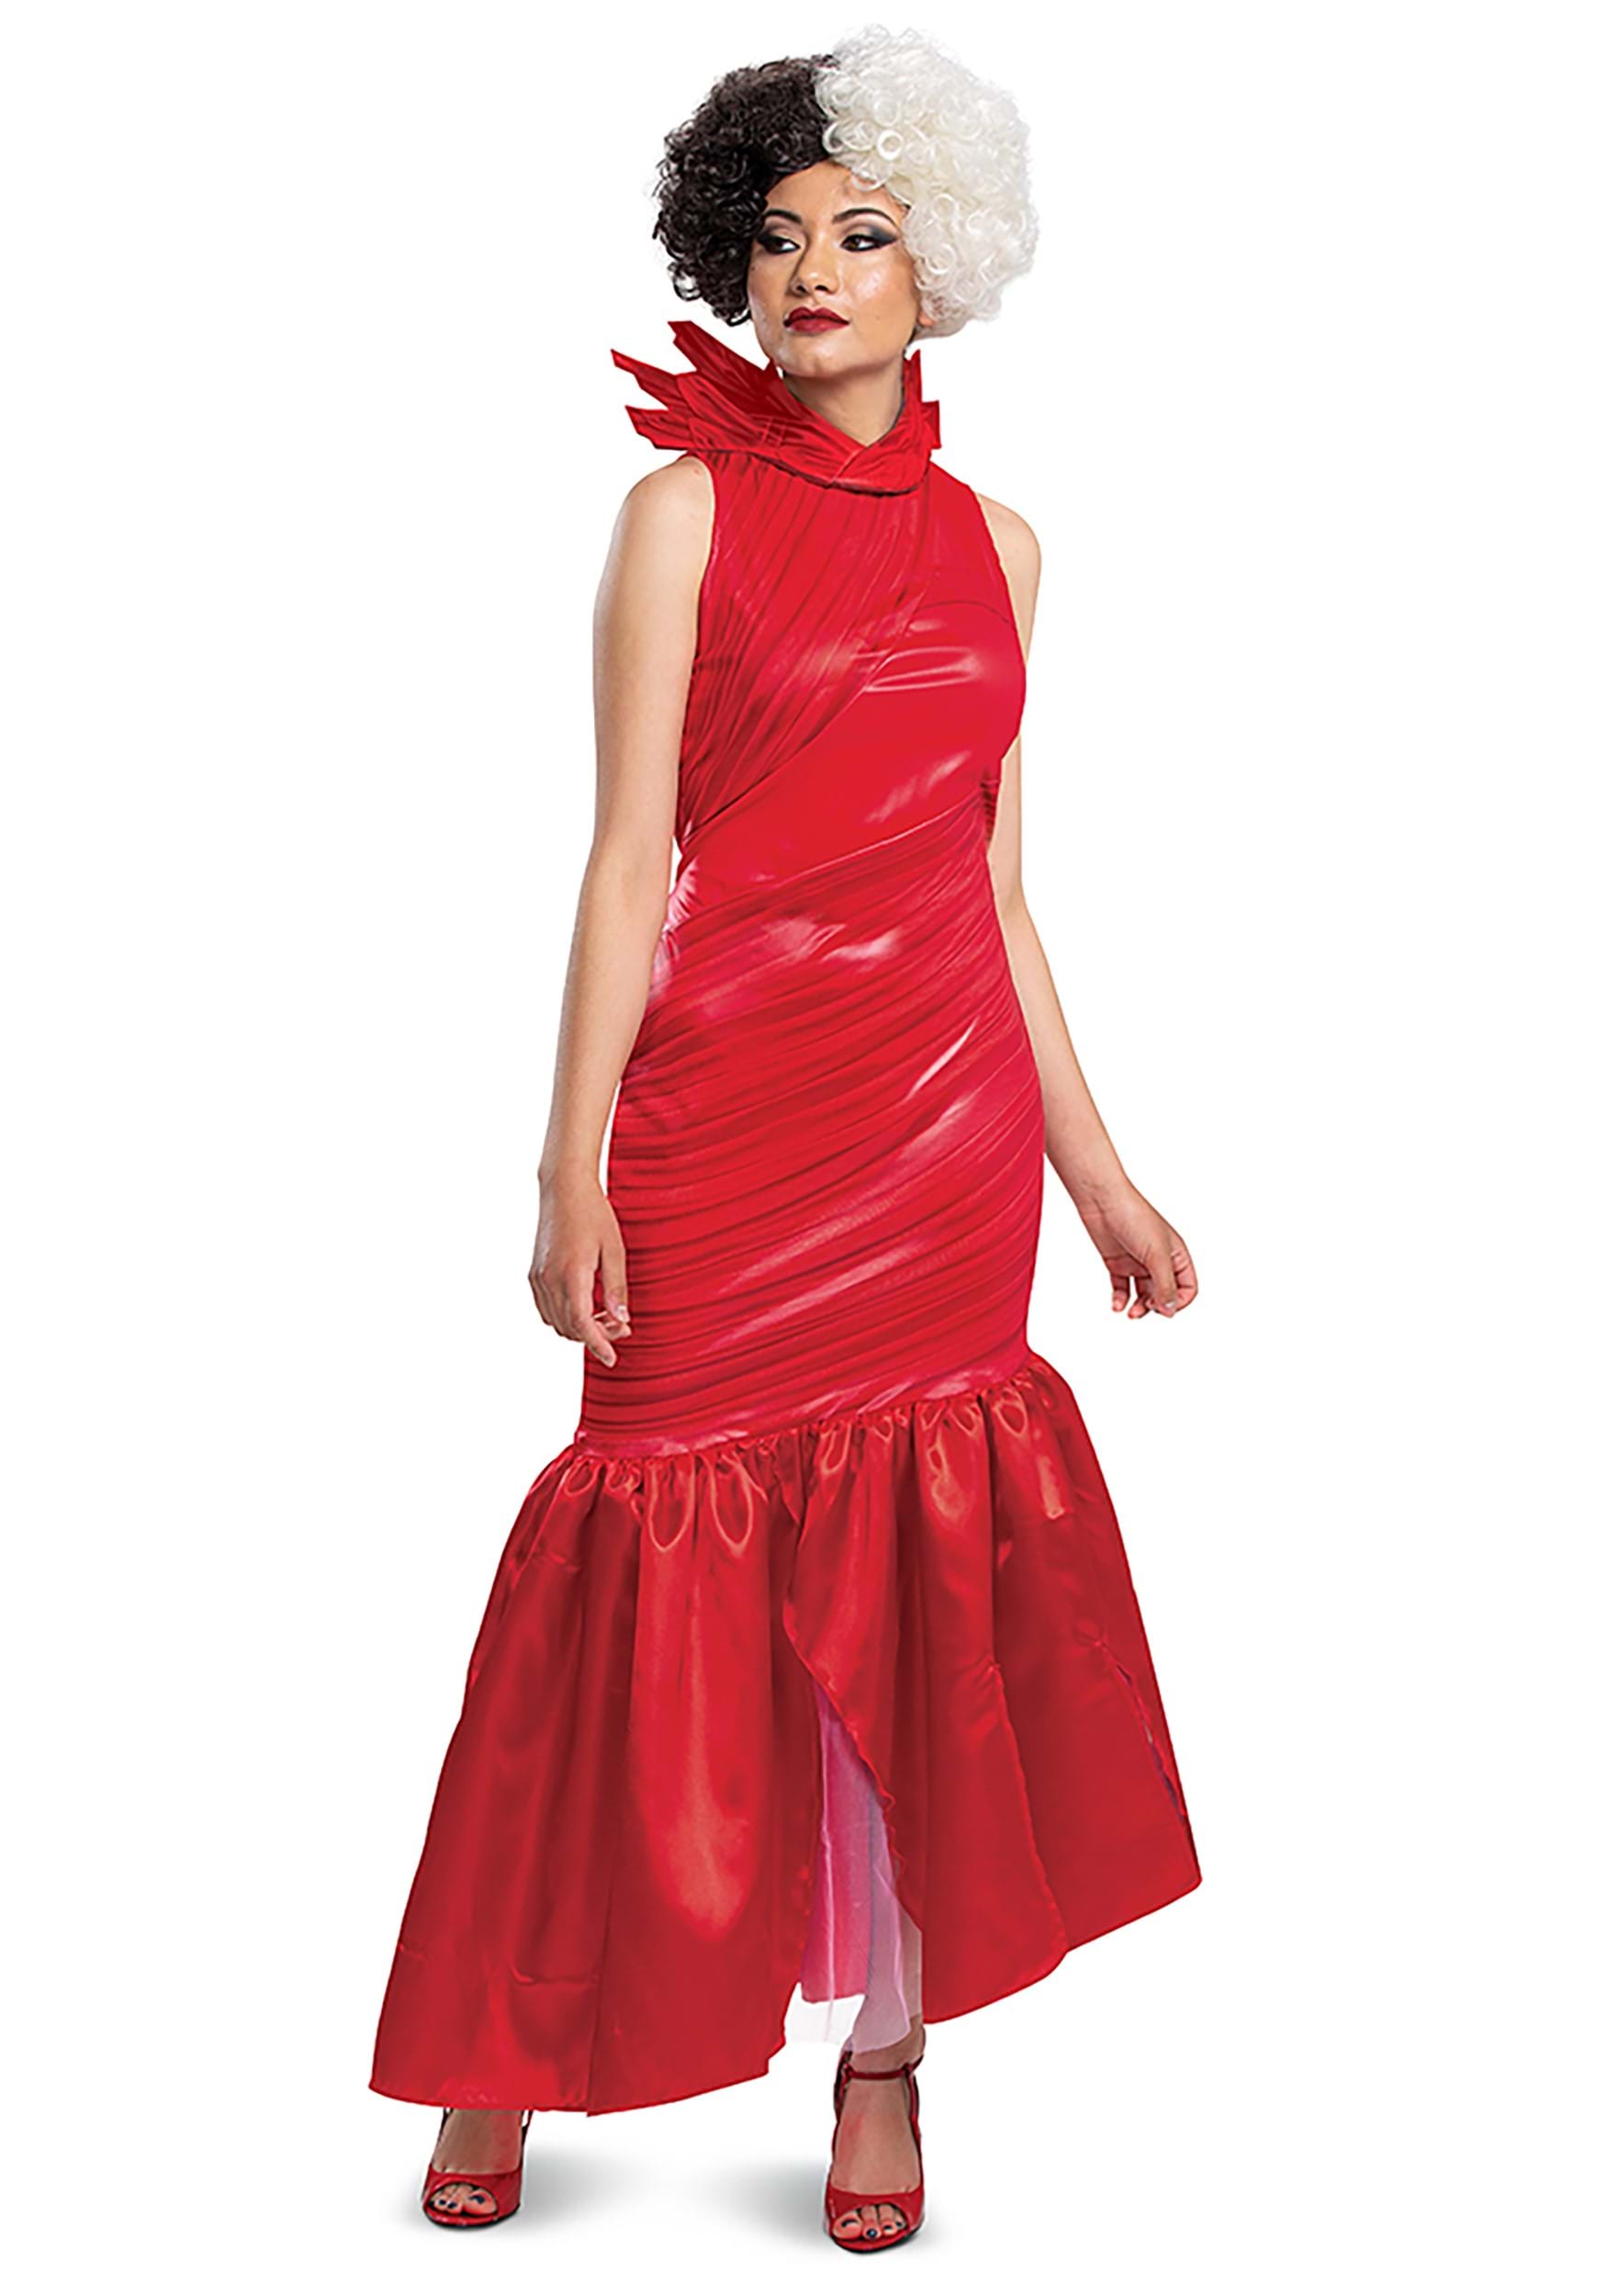 Photos - Fancy Dress Winsun Dress Disguise Adult Cruella Red Dress Classic Costume 